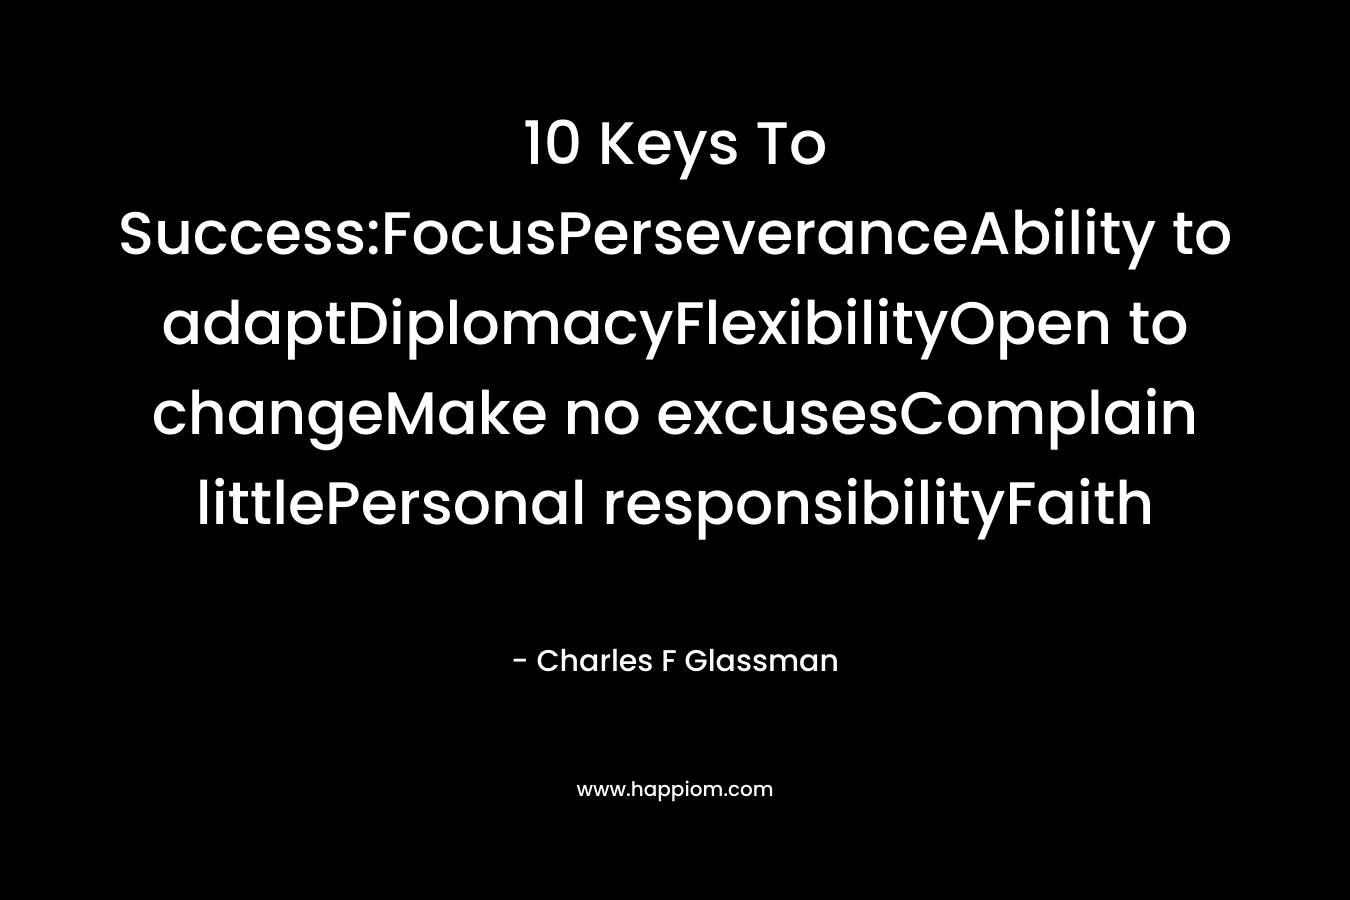 10 Keys To Success:FocusPerseveranceAbility to adaptDiplomacyFlexibilityOpen to changeMake no excusesComplain littlePersonal responsibilityFaith